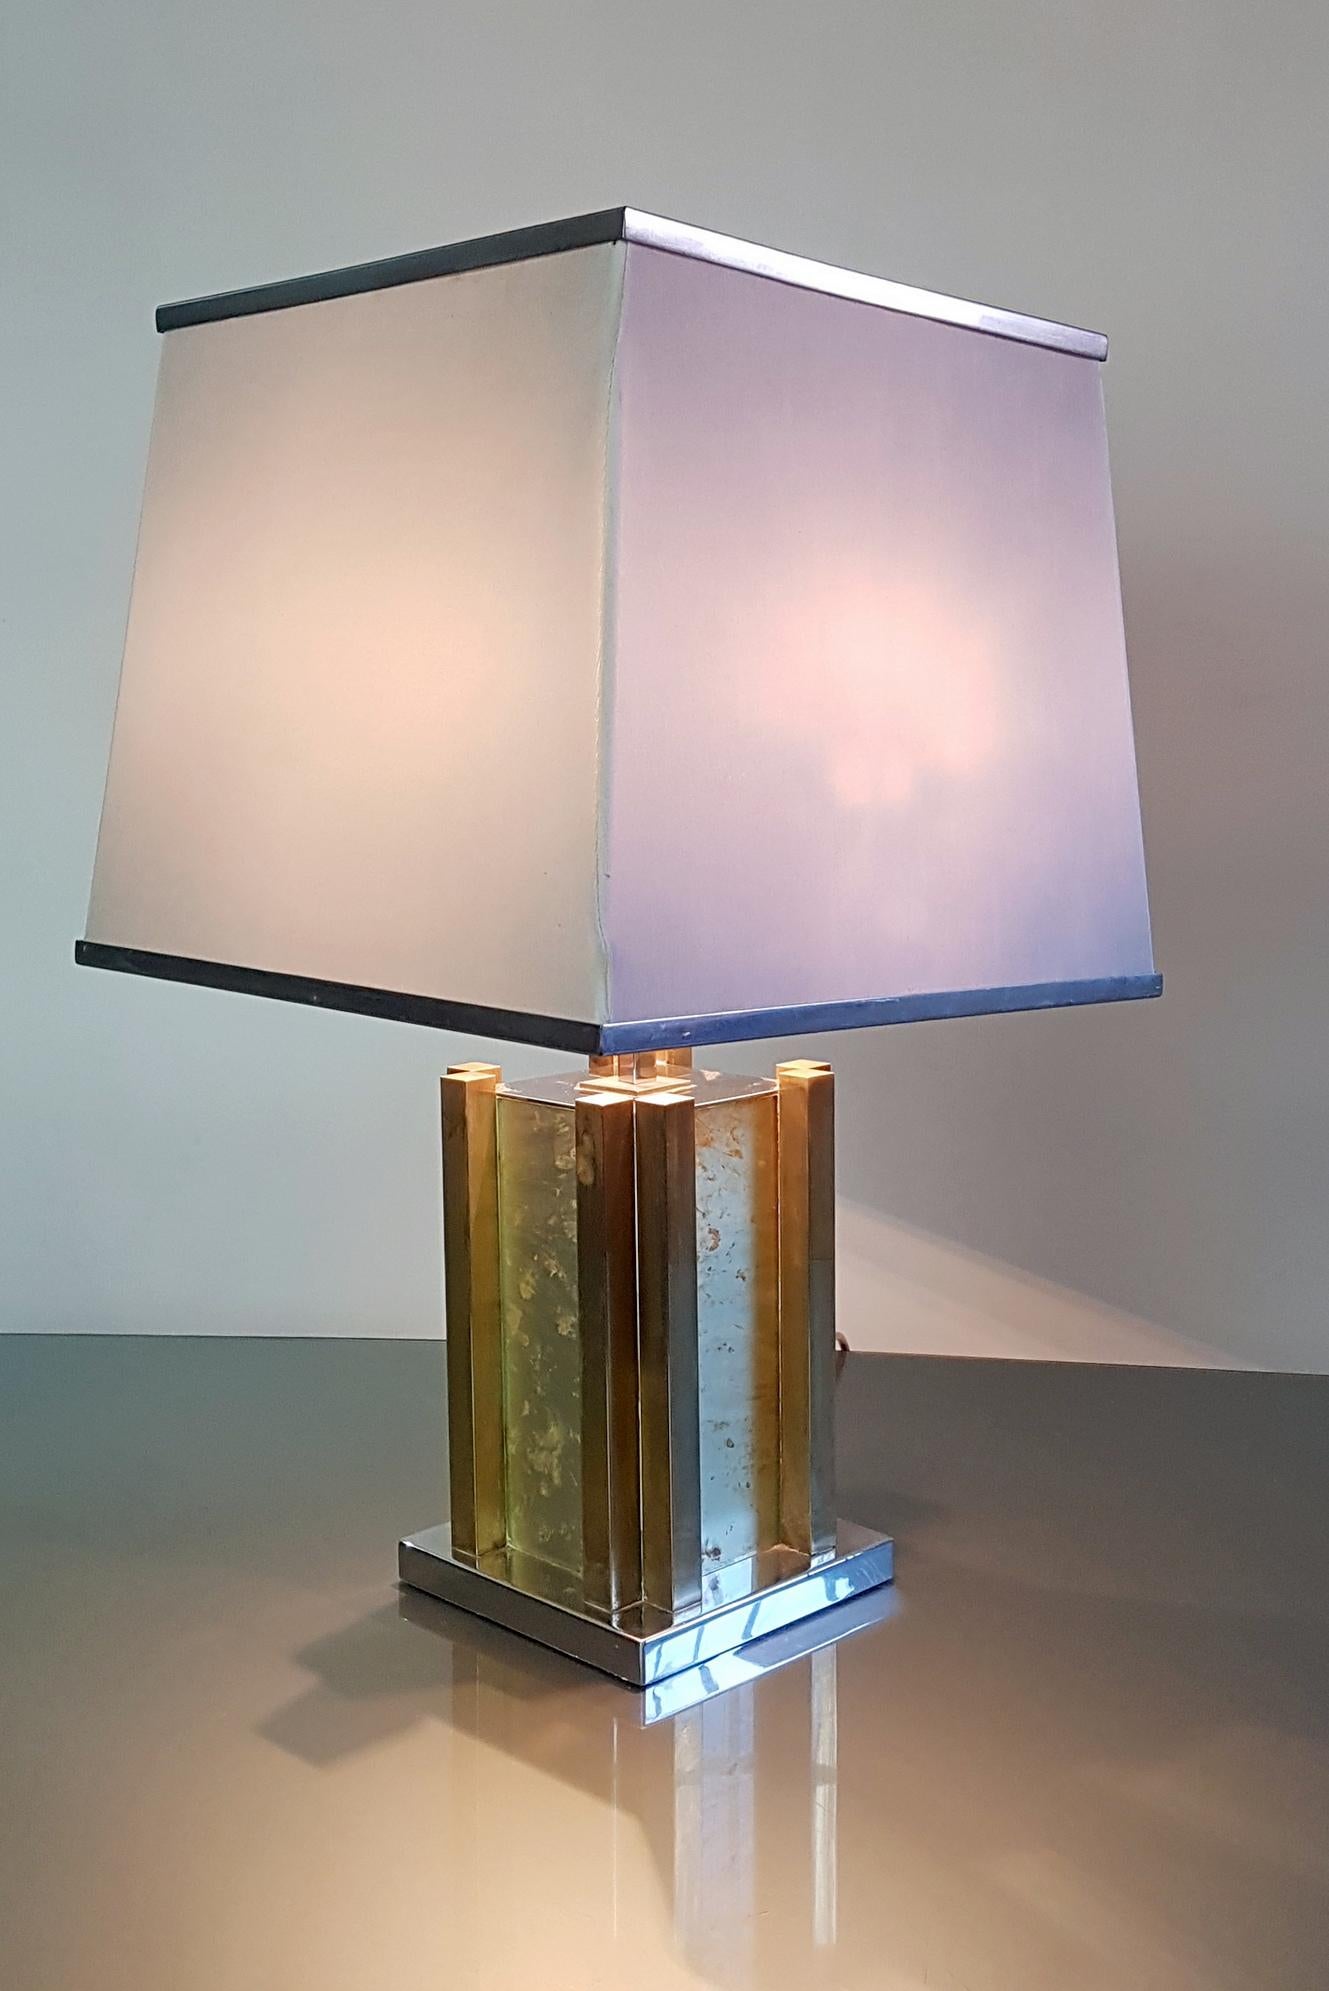 Italian Romeo Rega Table Lamp in Brass and Chrome made in Italy